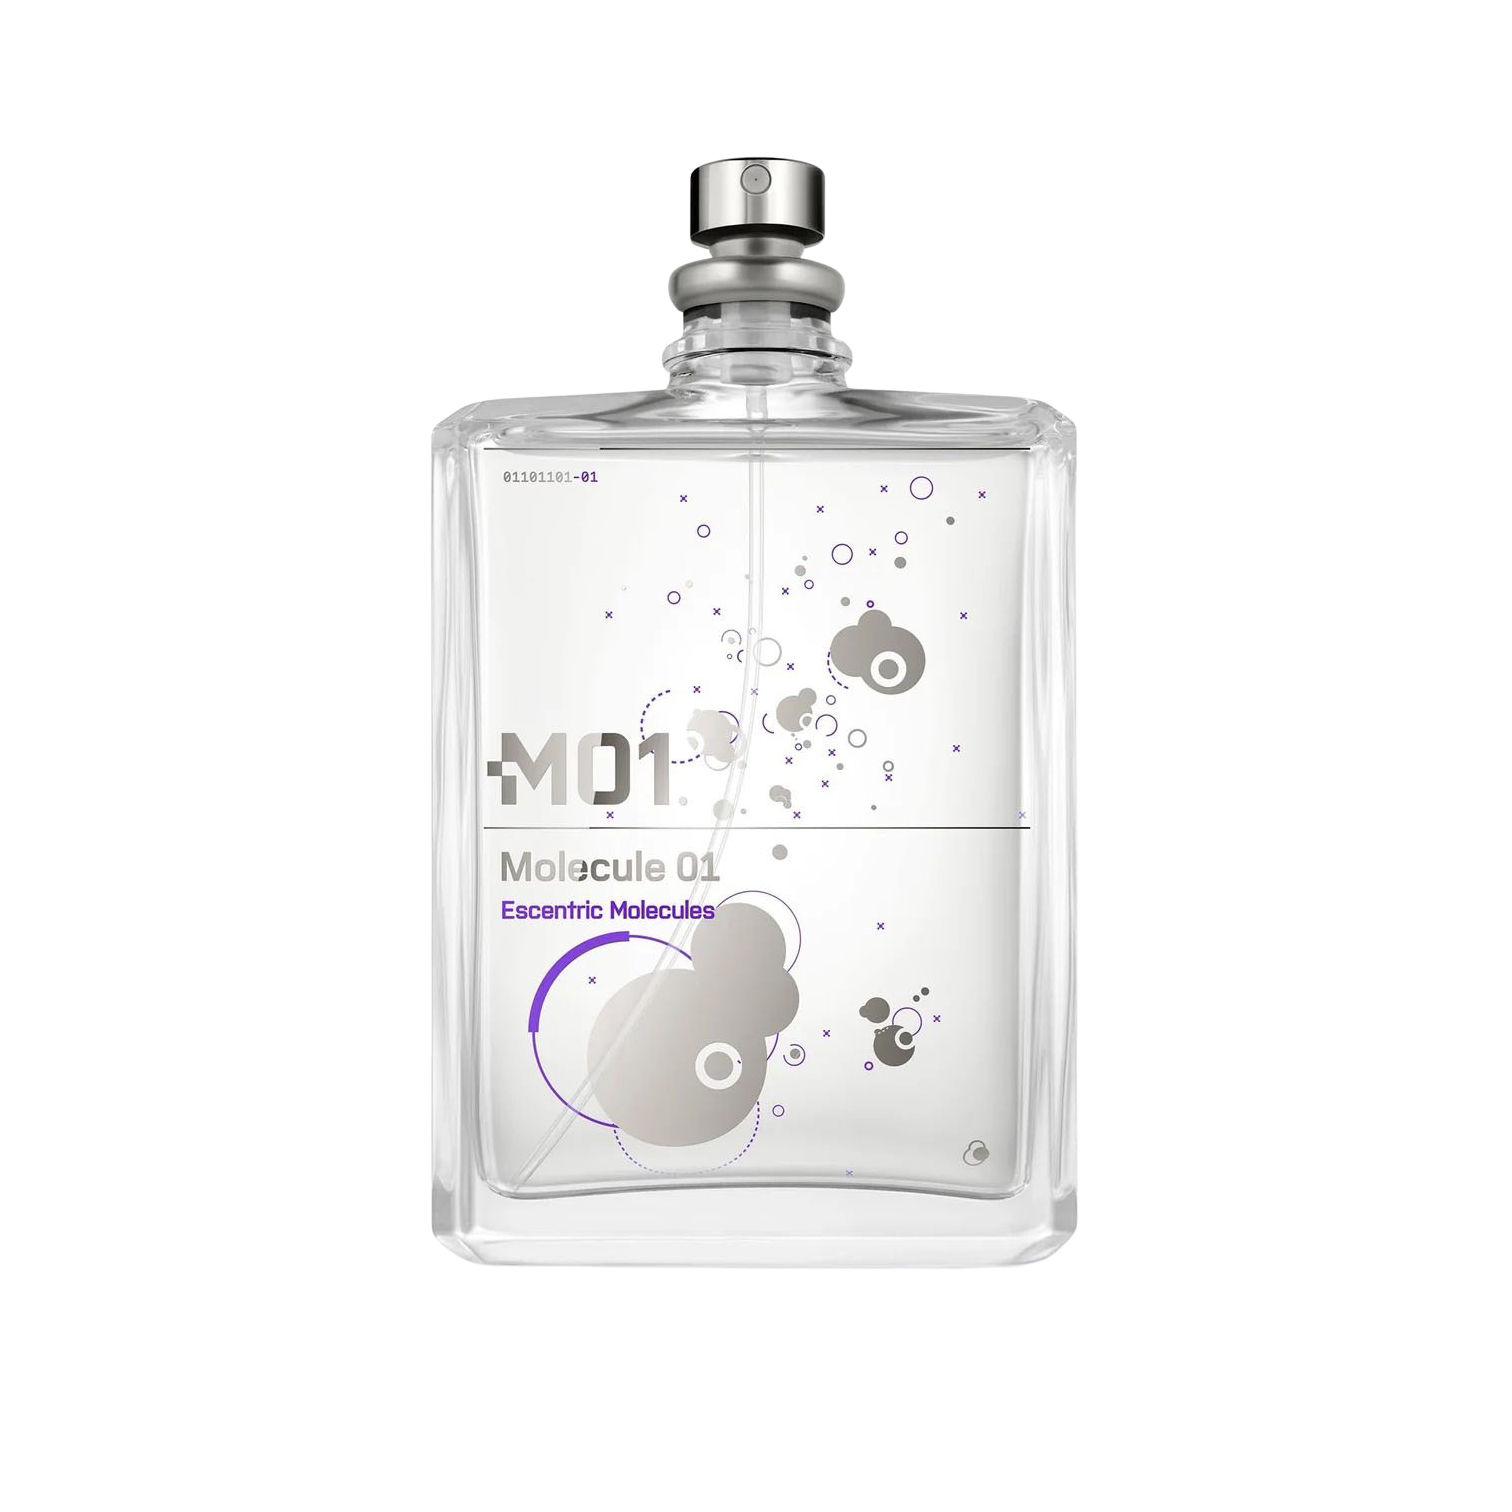 Escentric Molecules Molecule 01 100ml Perfume Feature